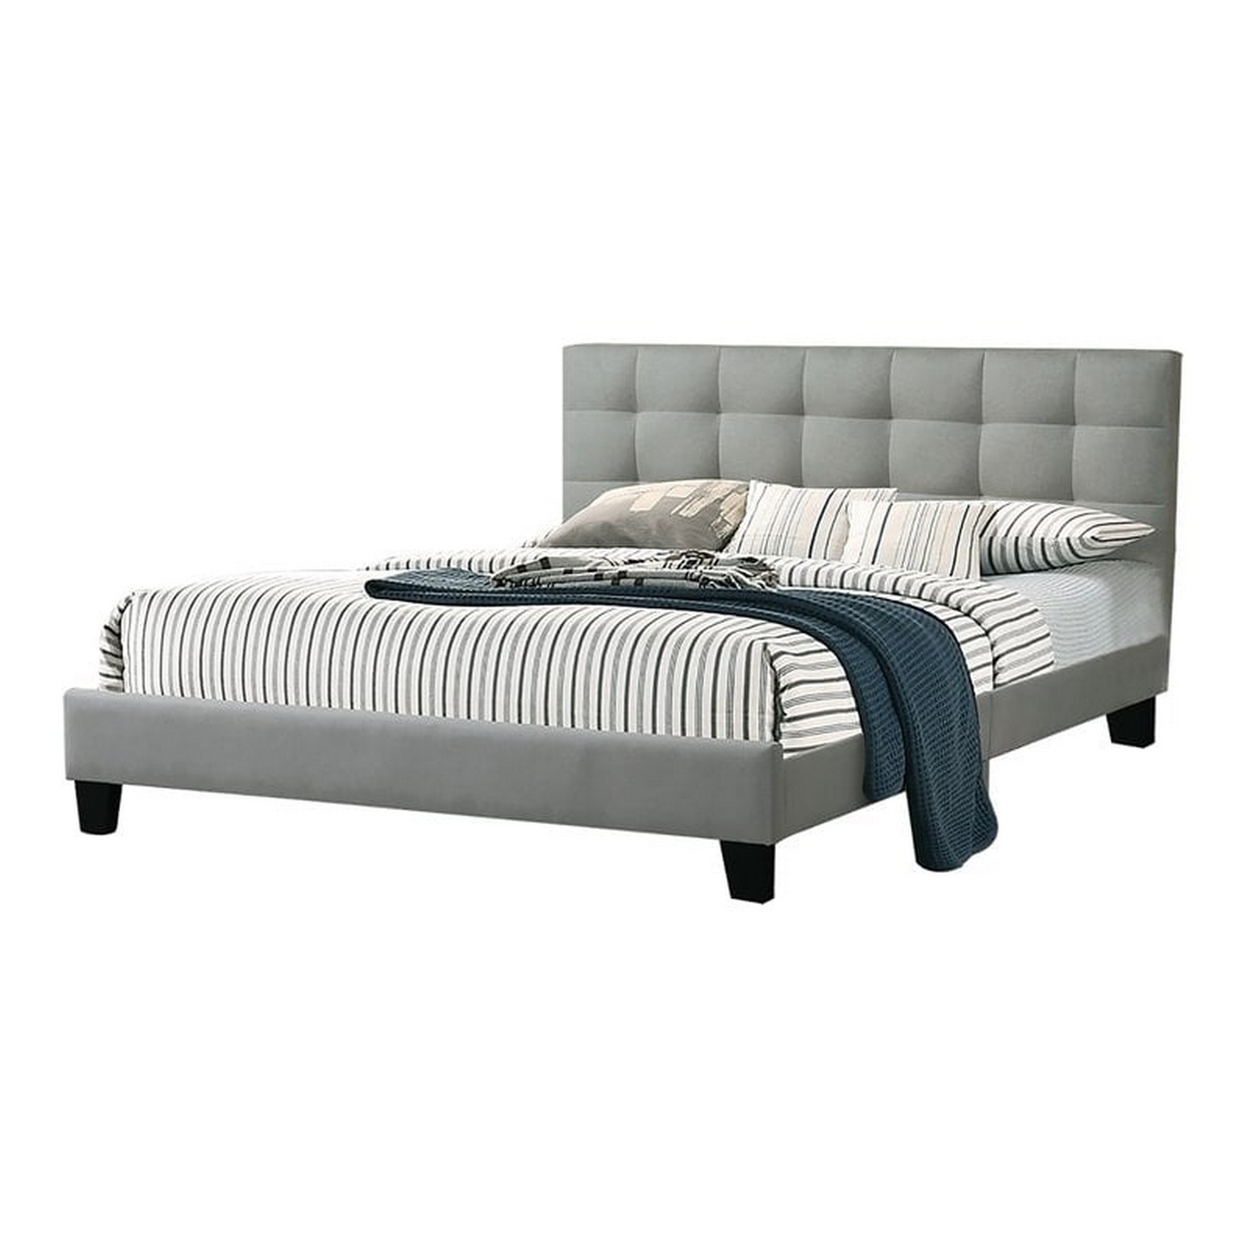 Eve Platform King Size Bed, Vertical Channel Tufted Light Gray Upholstery- Saltoro Sherpi